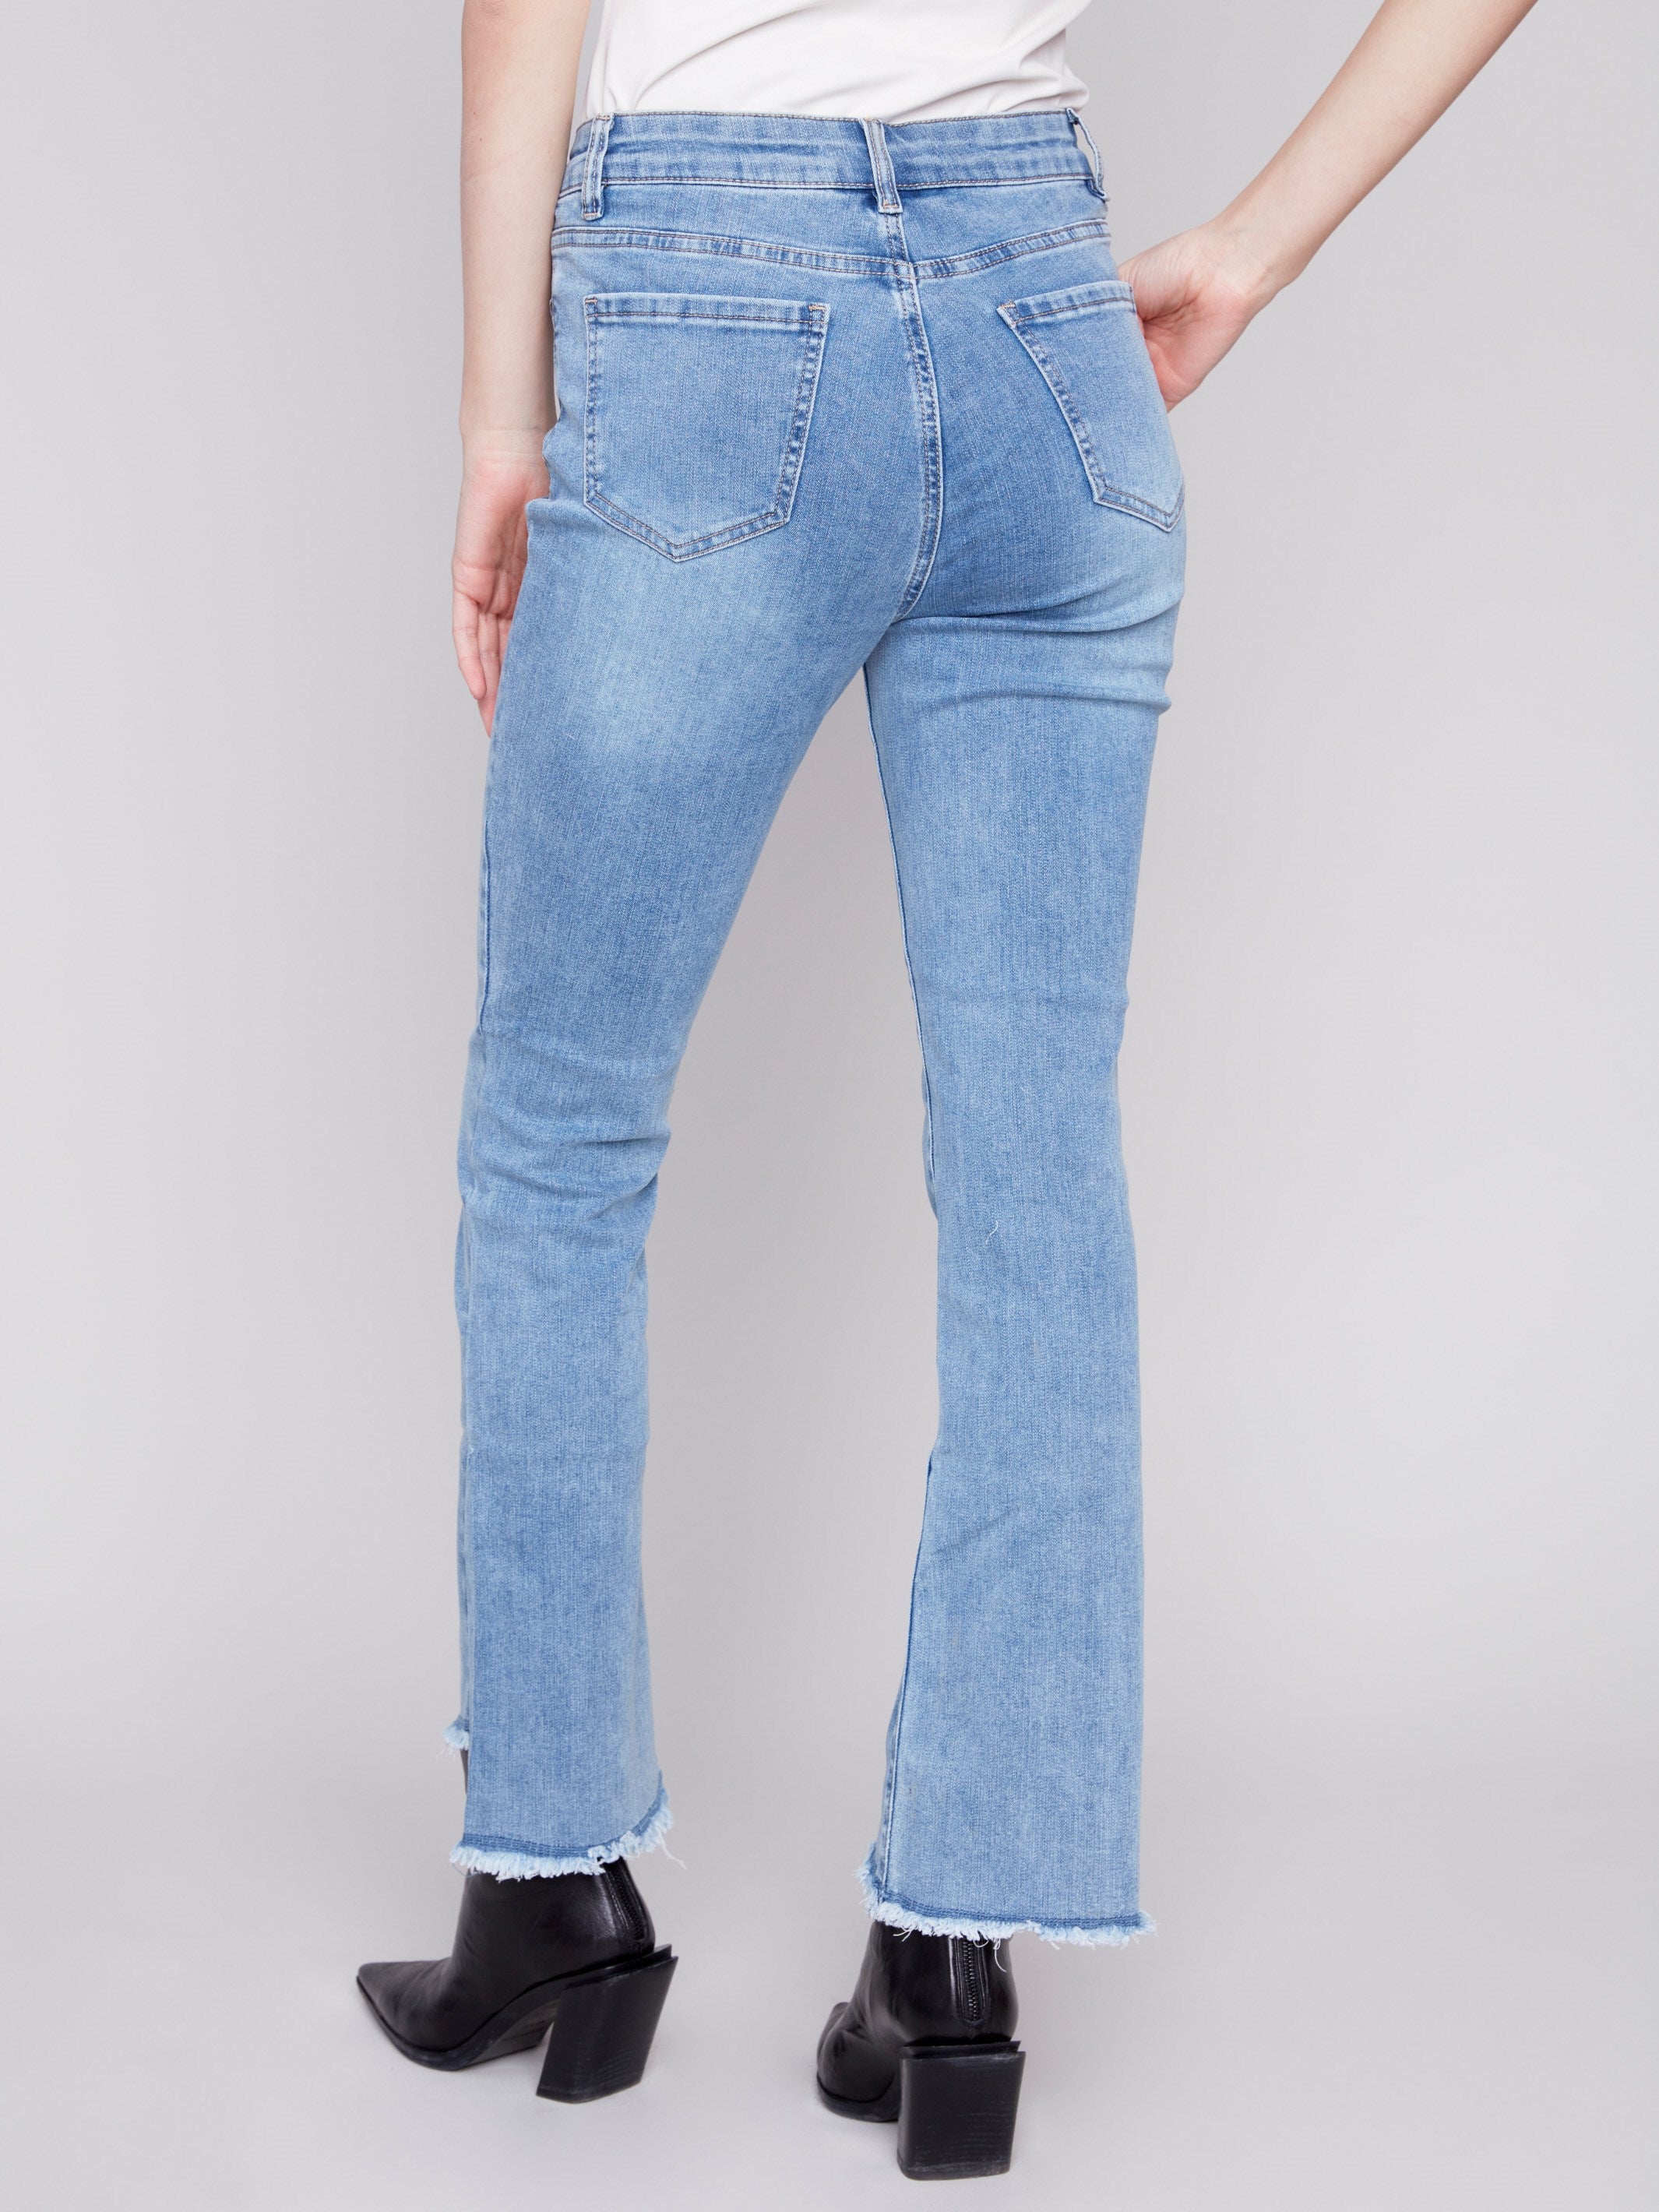 Charlie B Bootcut Jeans with Asymmetrical Hem - Light Blue - Image 4